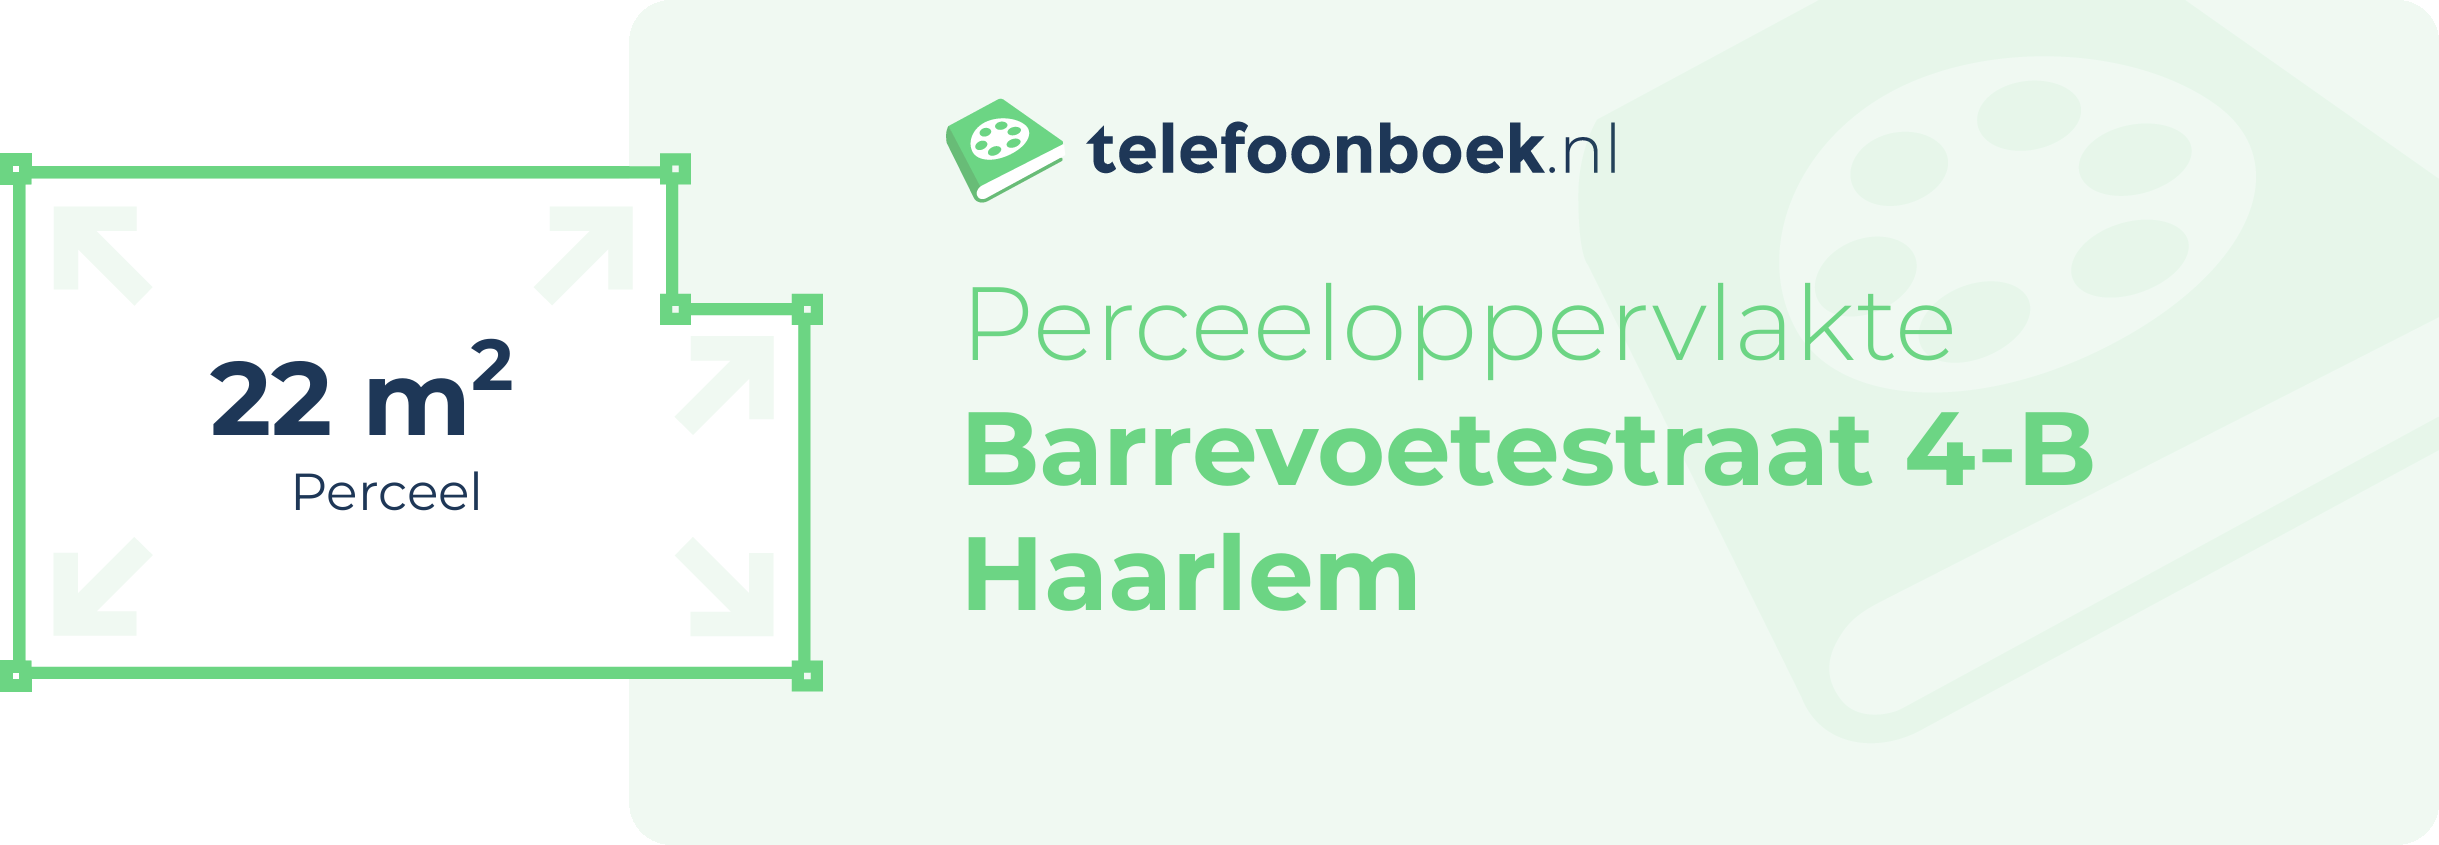 Perceeloppervlakte Barrevoetestraat 4-B Haarlem